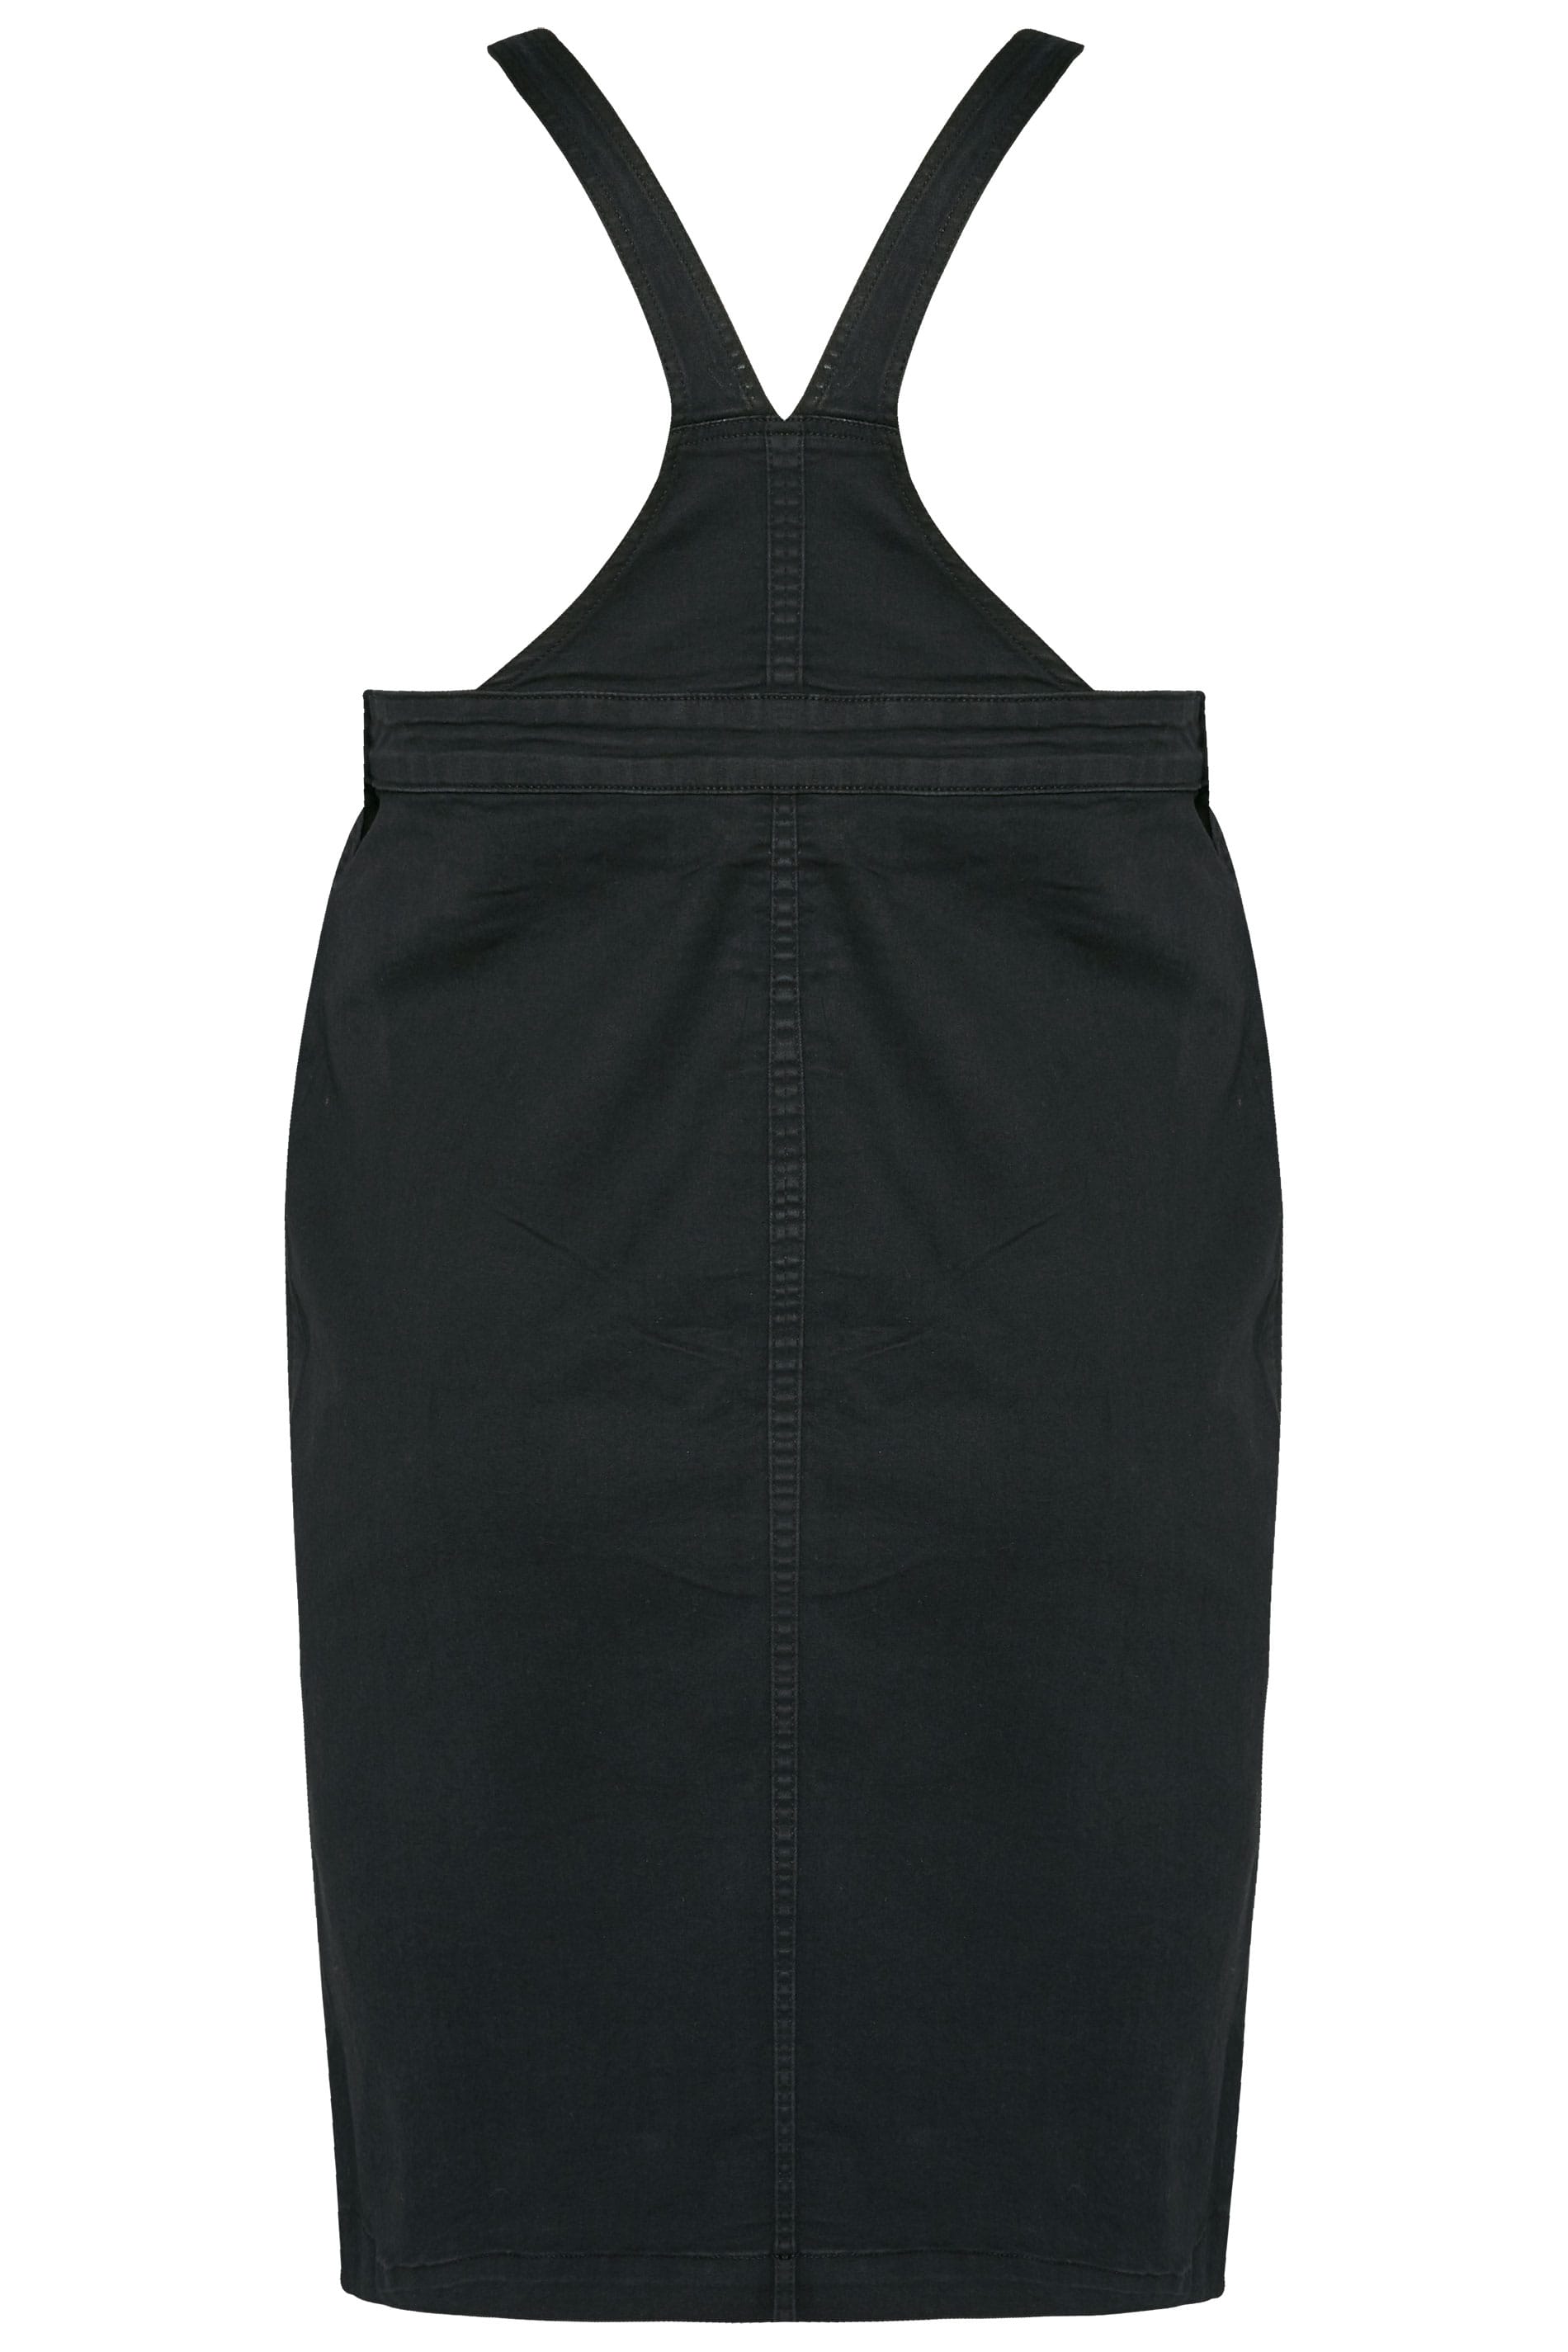 Buy > denim pinafore dress plus size > in stock